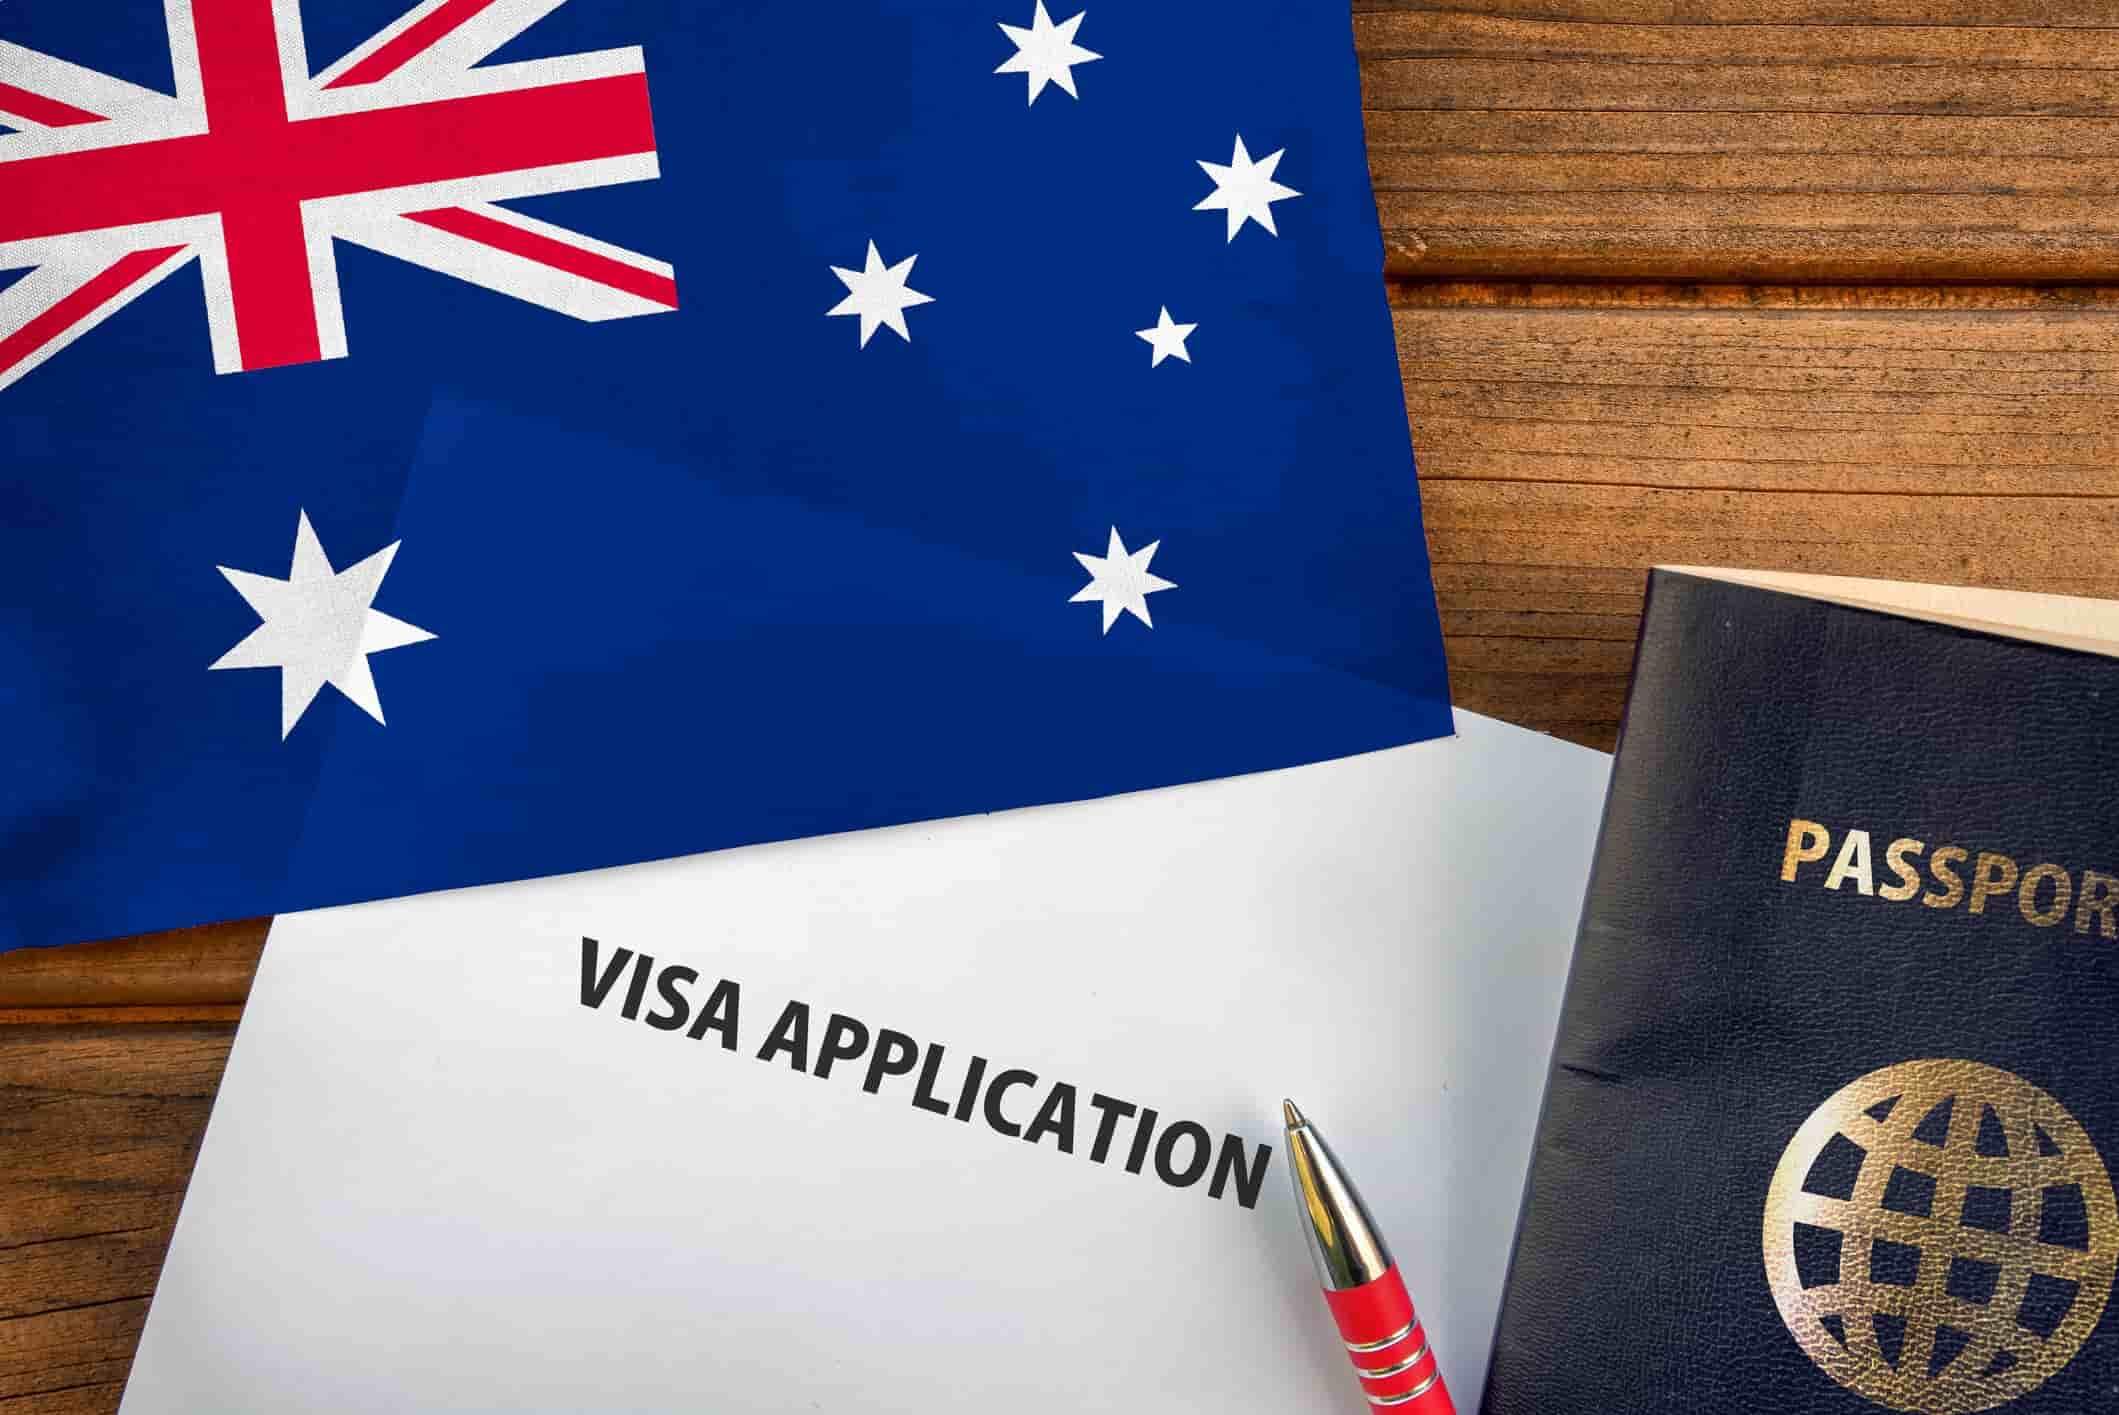 visa application form, a passport and flag of Australia